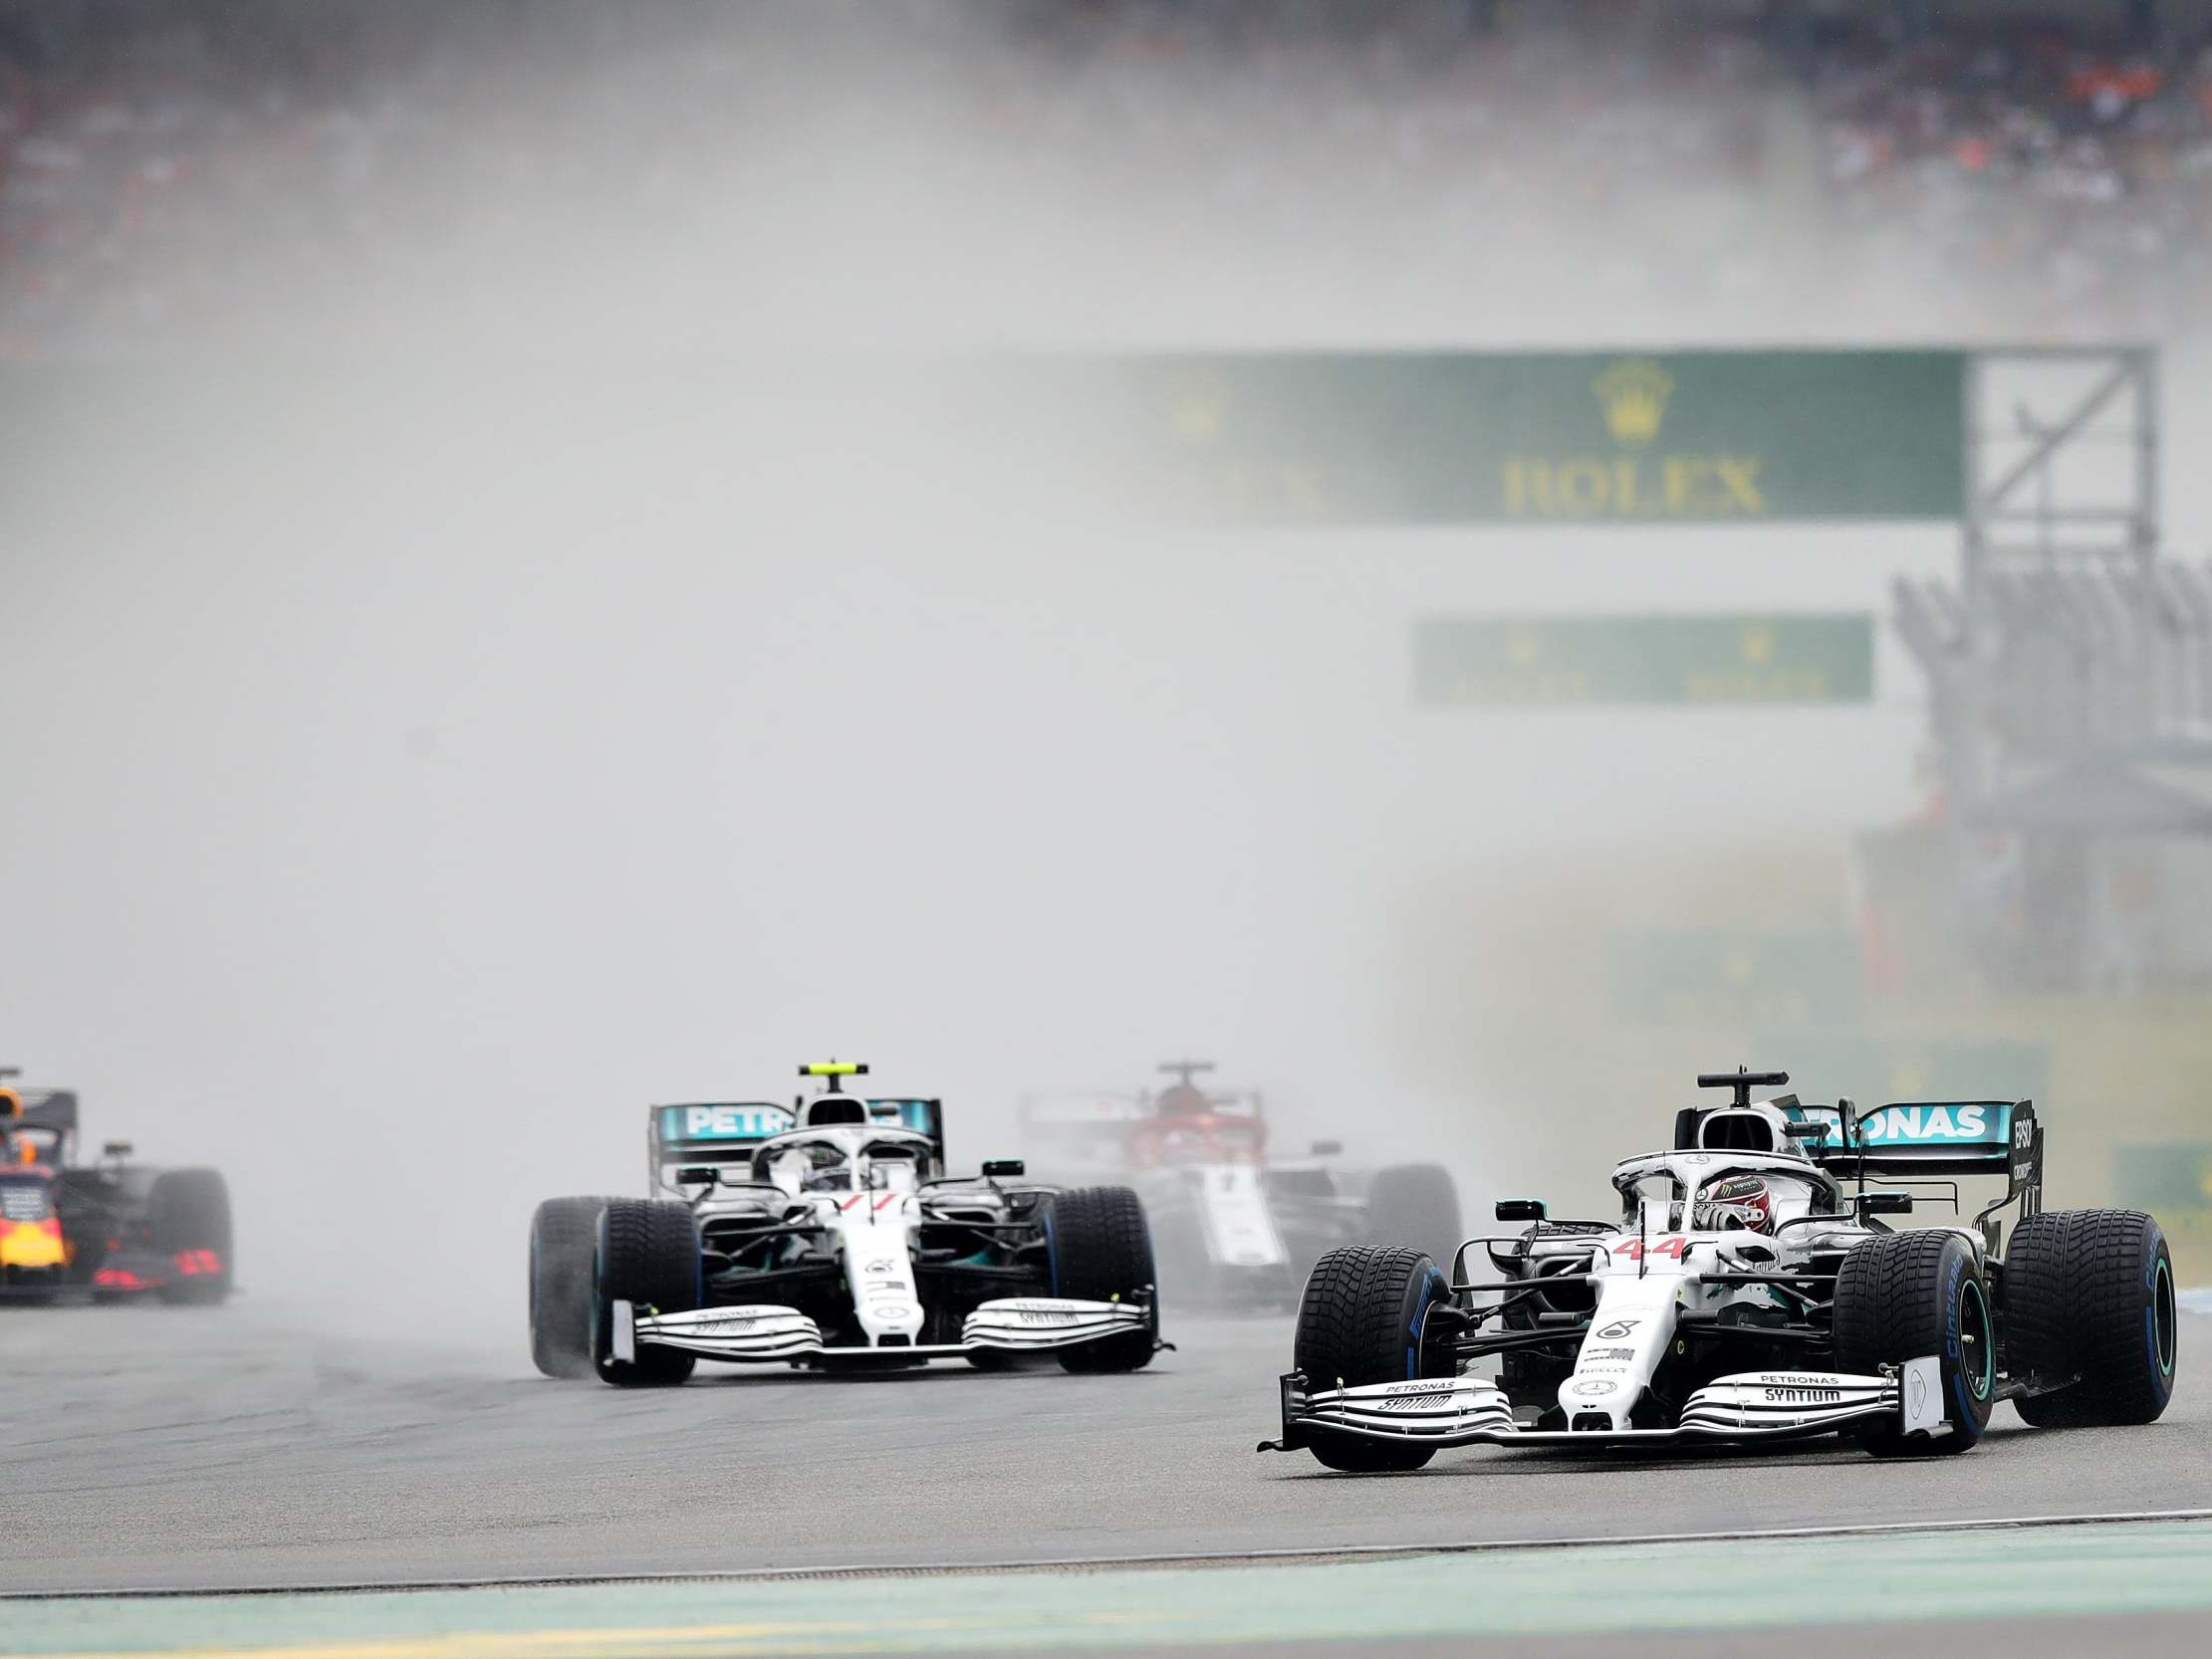 Lewis Hamilton lead the start of the German Grand Prix in he rain